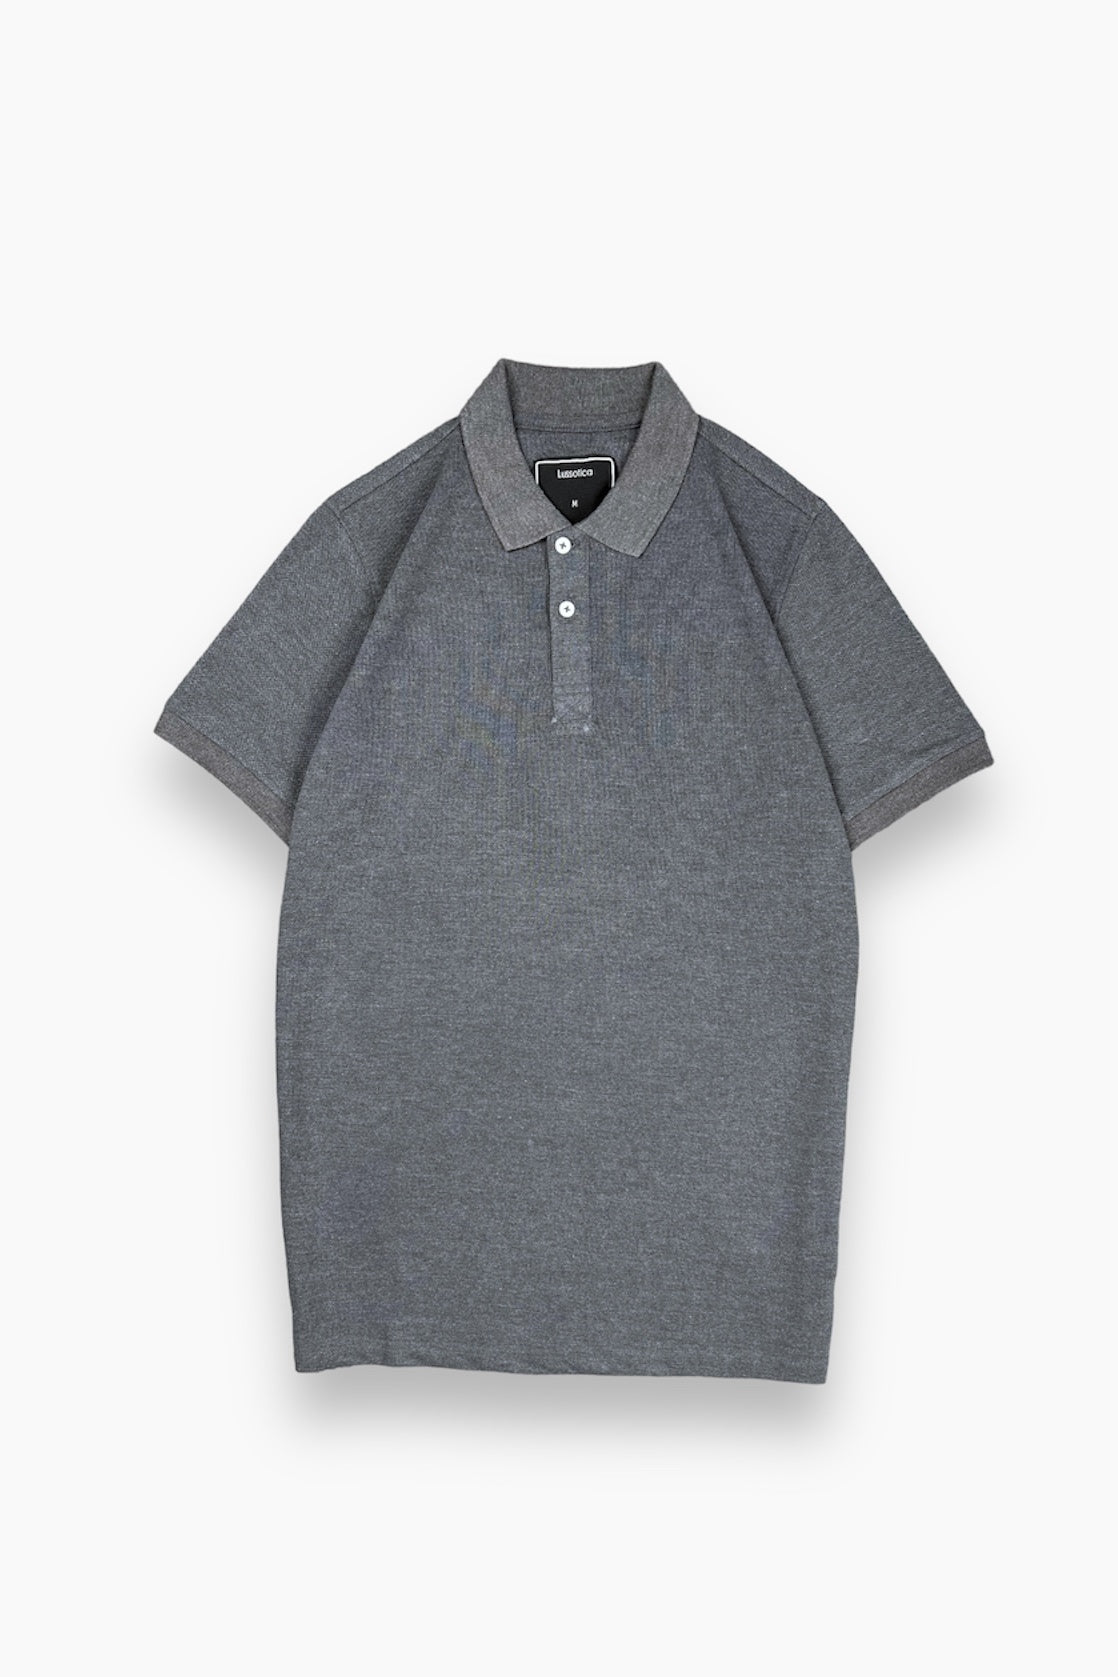 Polo Shirt by Lussotica - Storm Sky LU751 - Short Sleeve